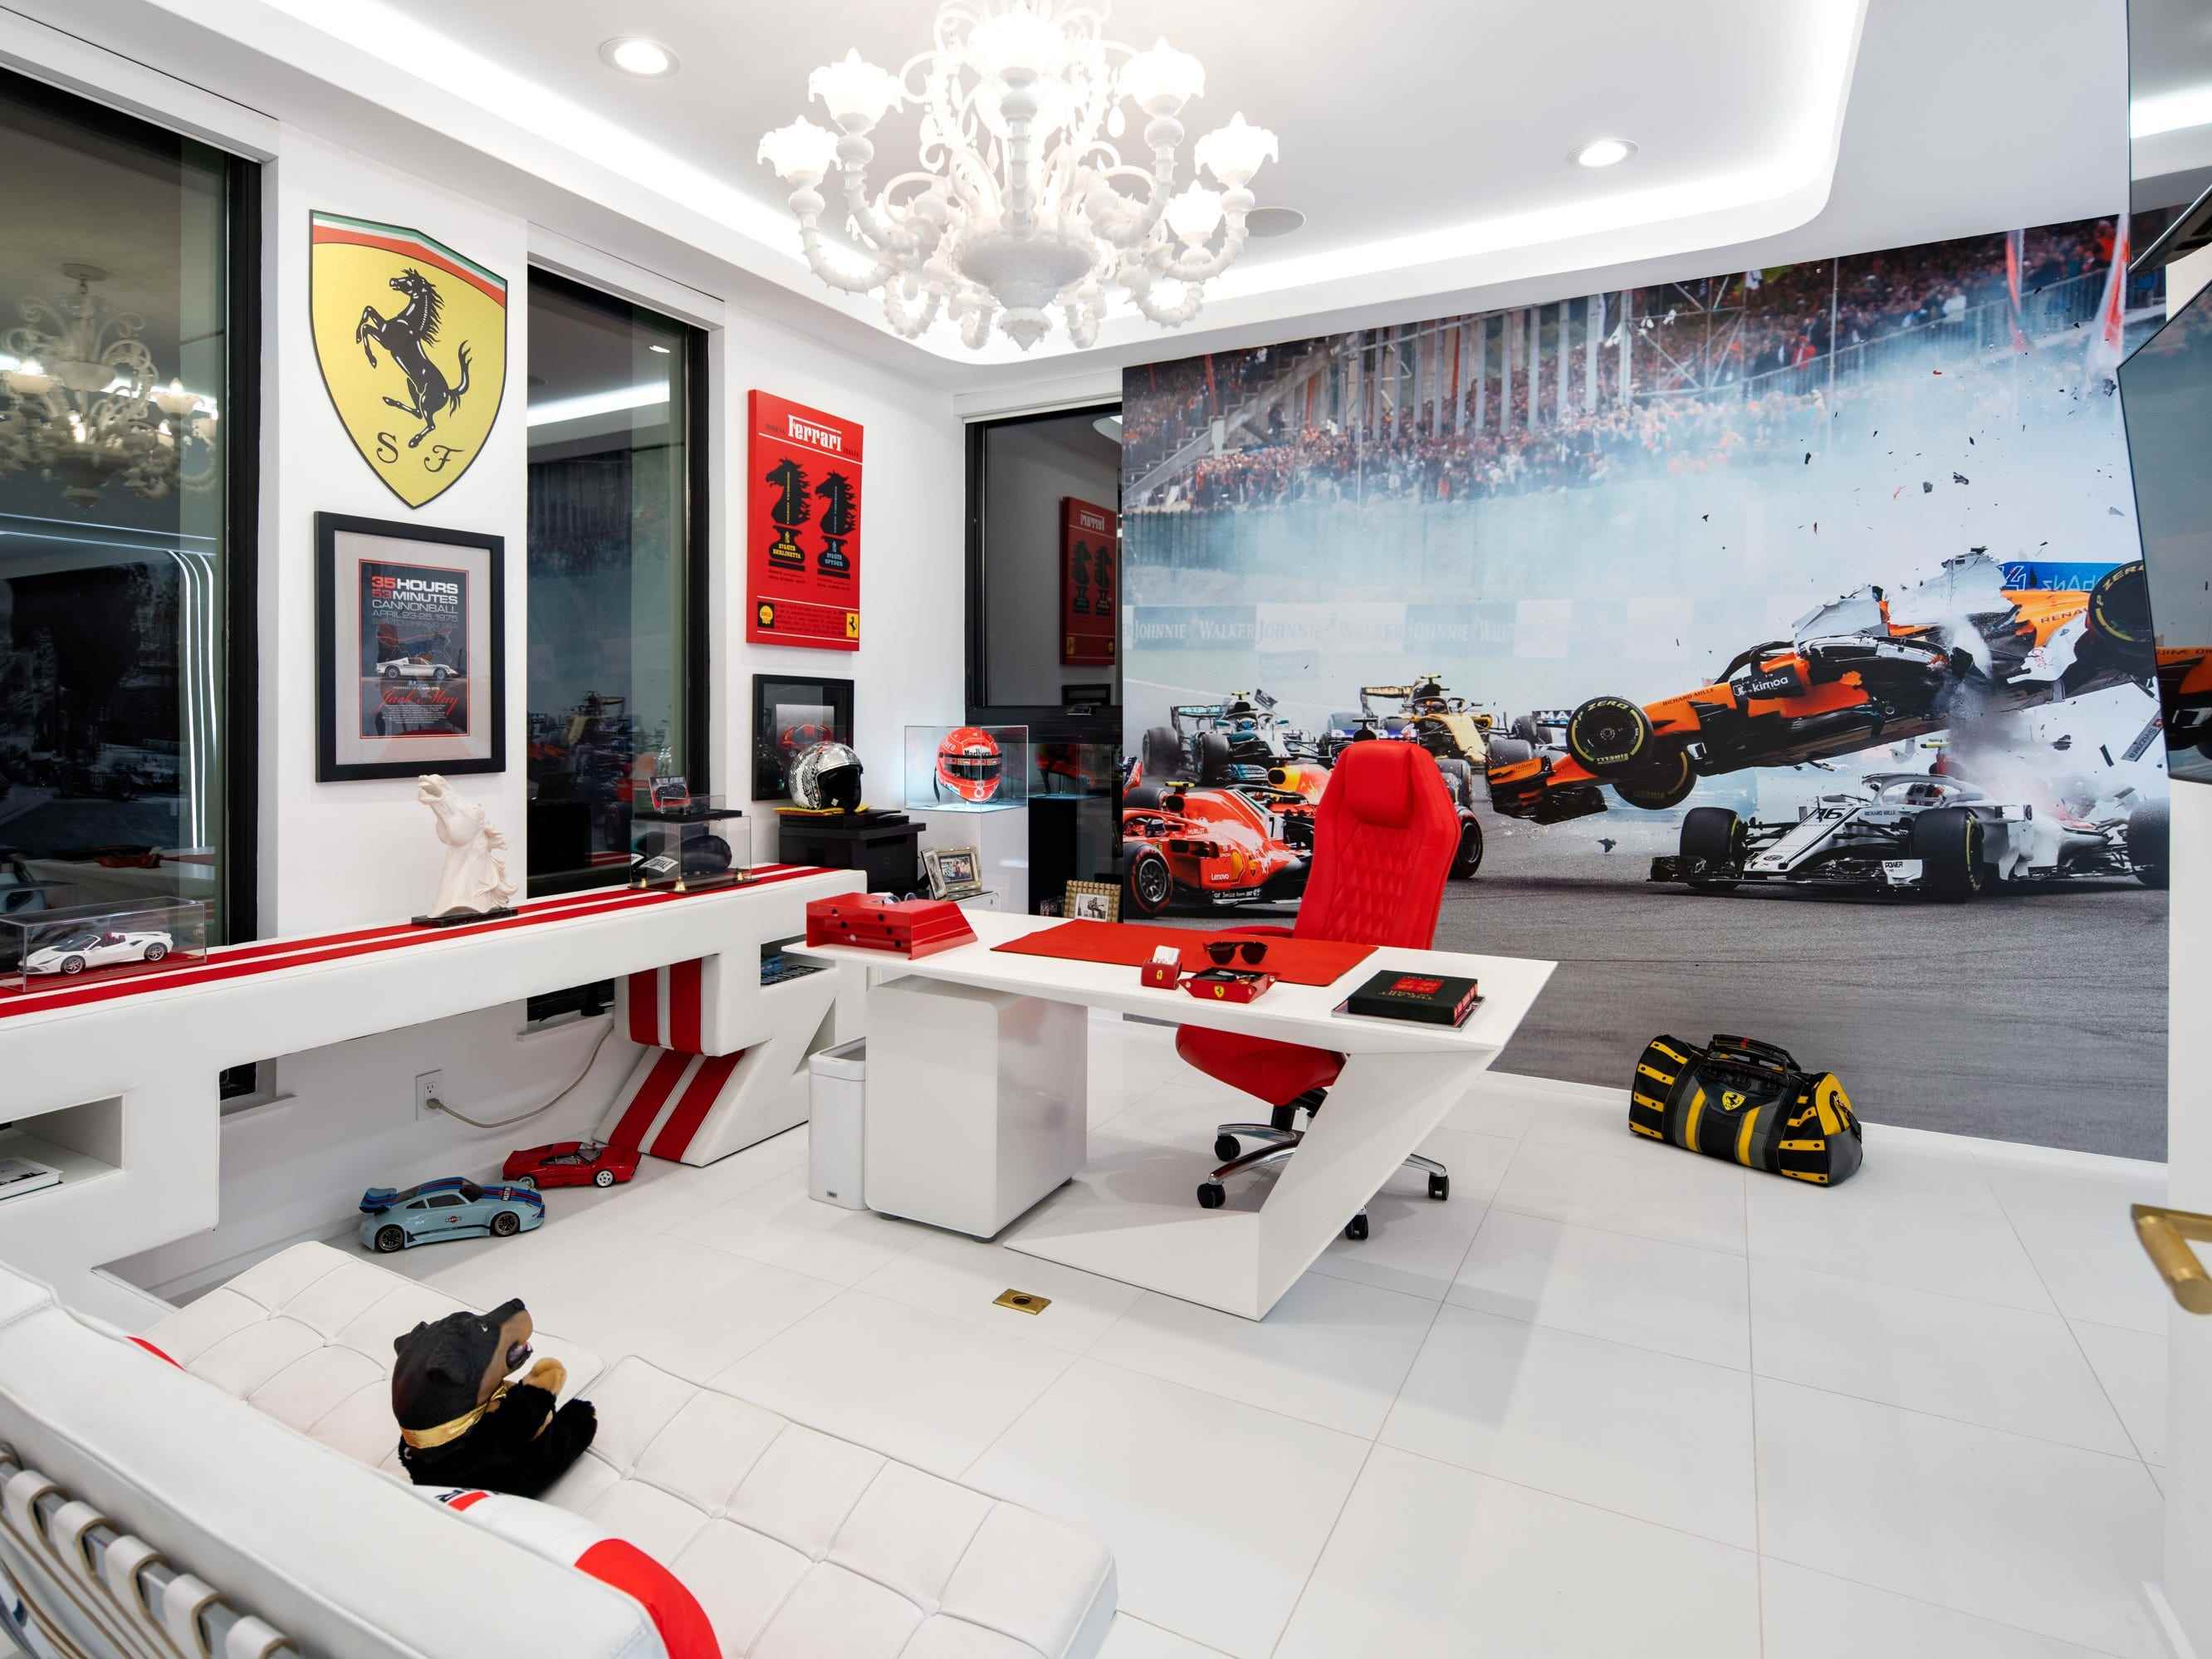 Das Büro im Ferrari-Stil.